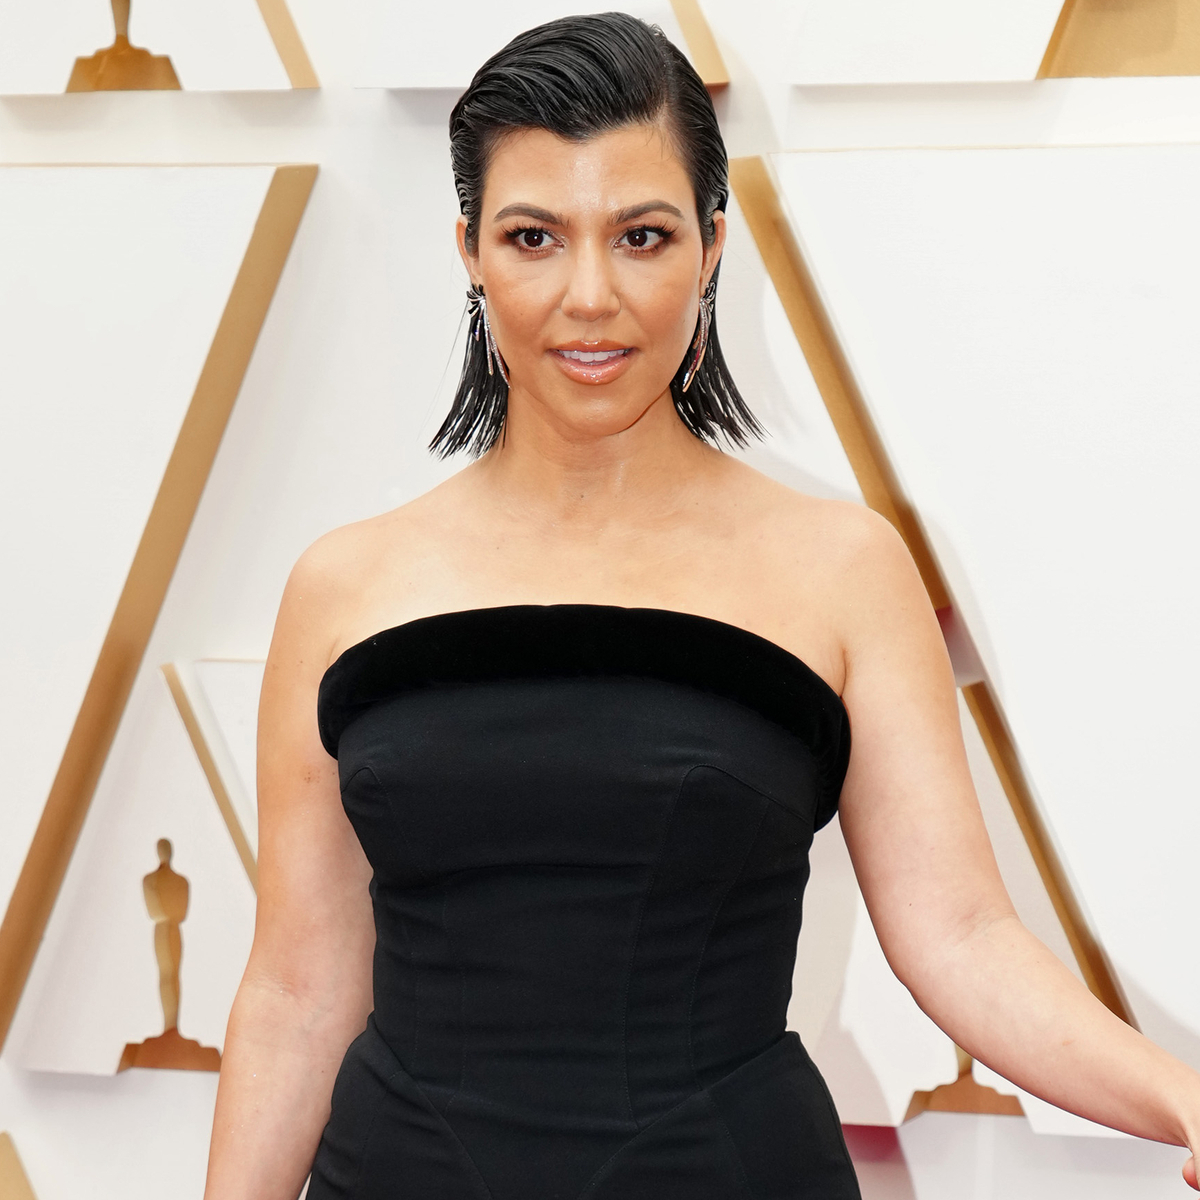 Kourtney Kardashian Shares What Led to Rocky’s Emergency Fetal Surgery